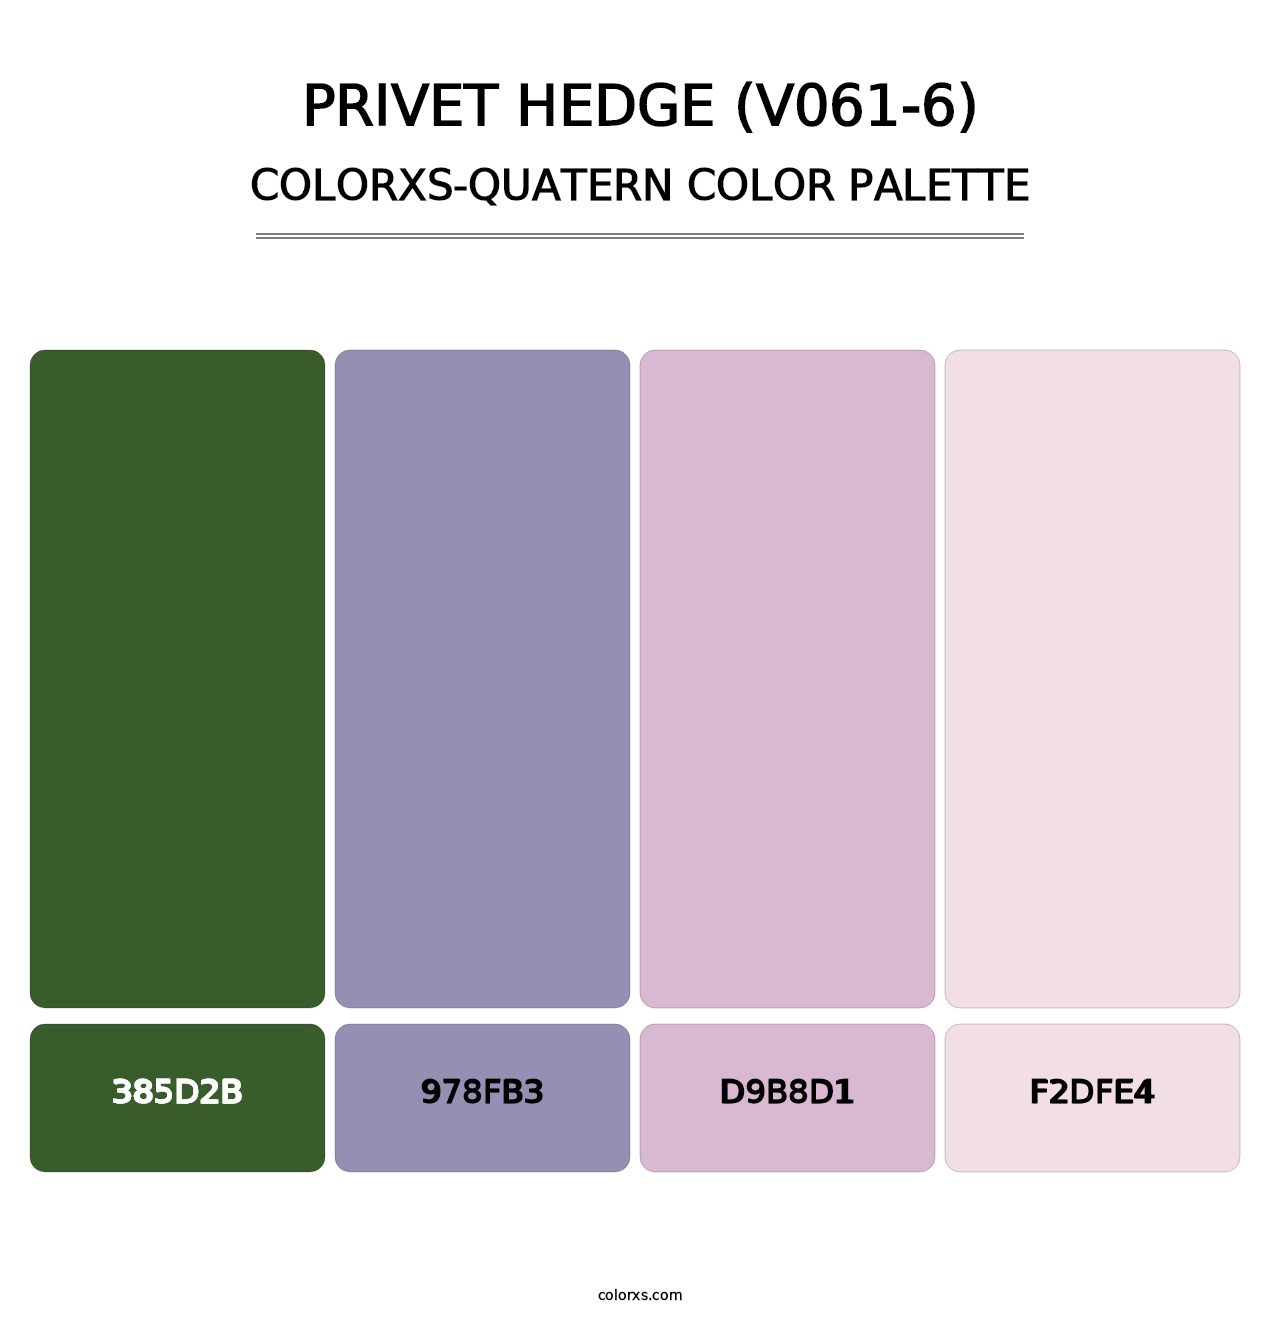 Privet Hedge (V061-6) - Colorxs Quatern Palette